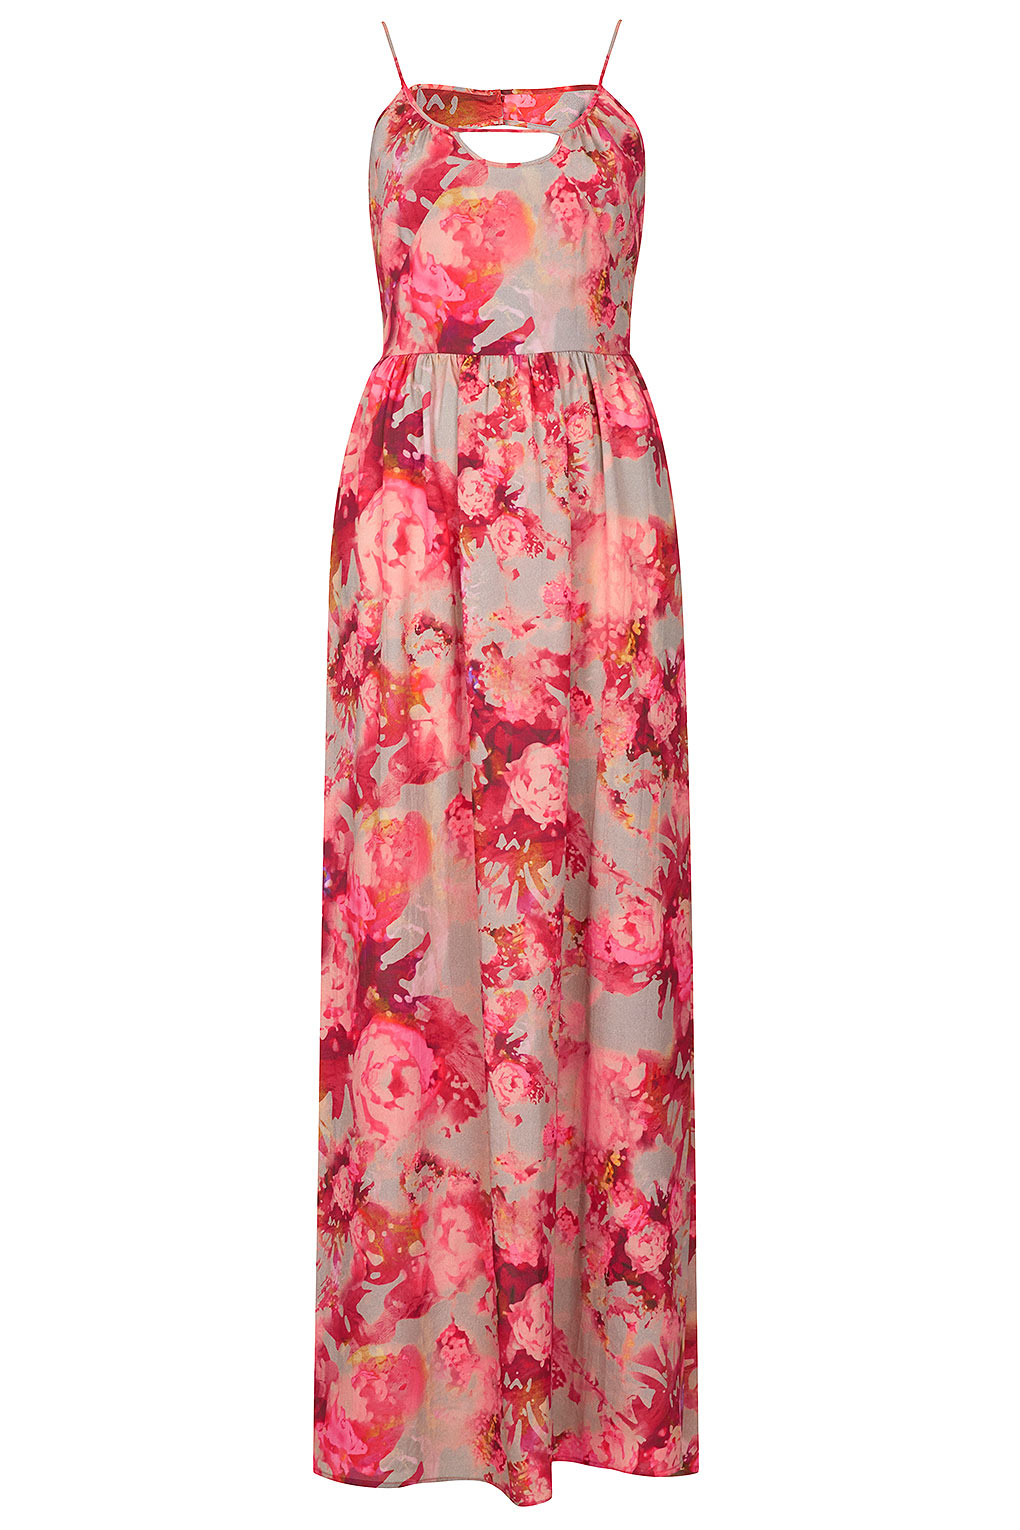 Lyst - Topshop Blur Floral Maxi Dress in Pink